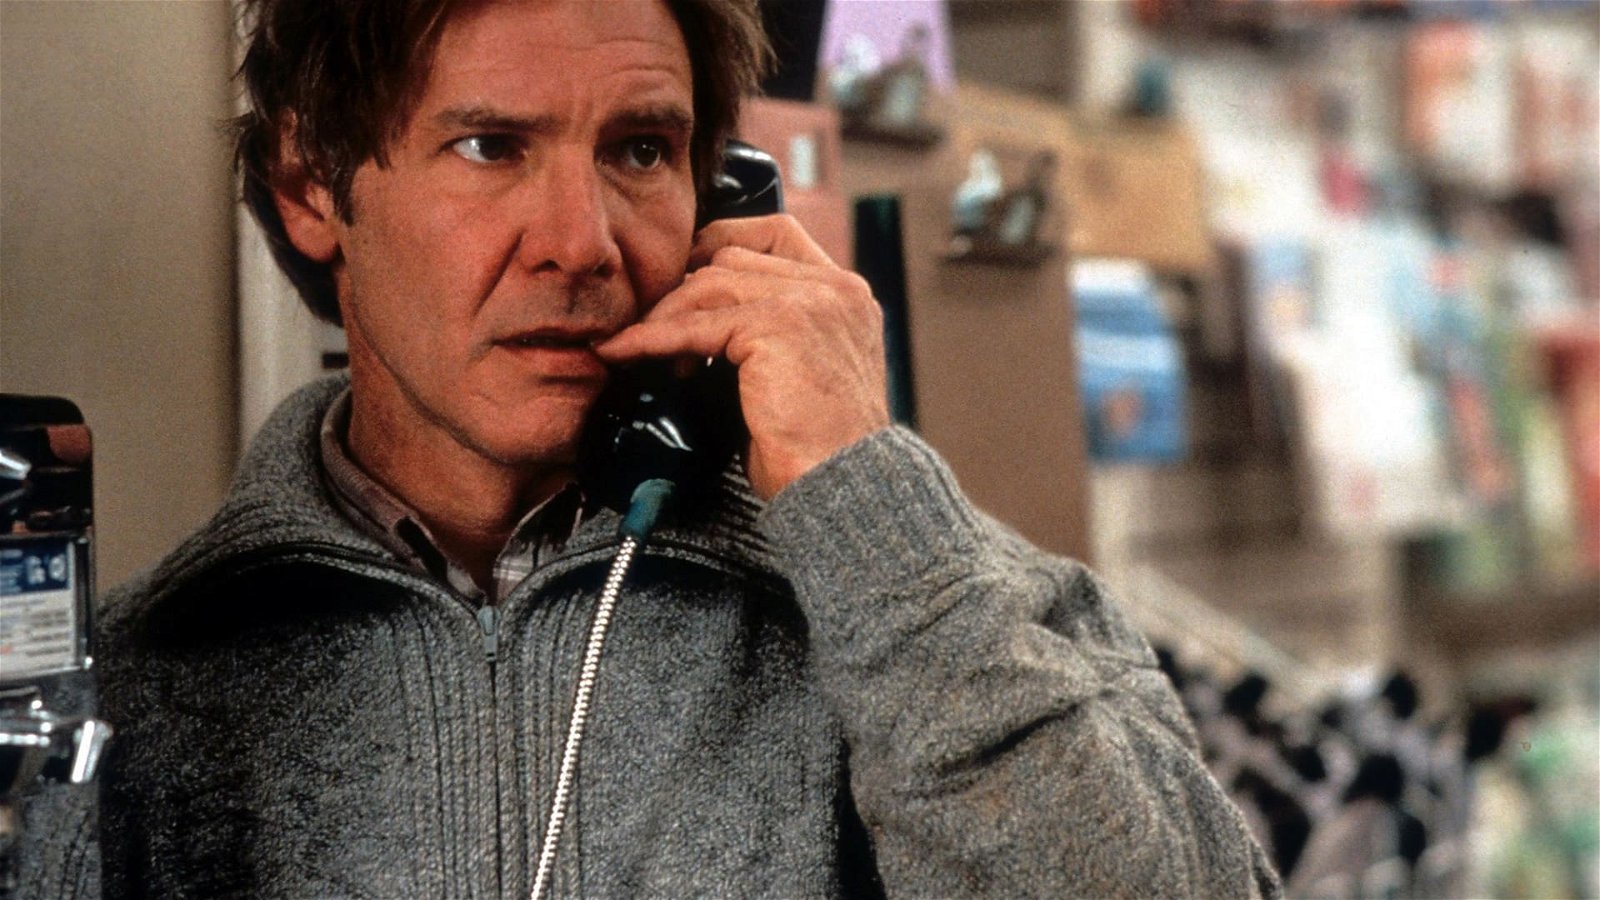 Fredagstips: Se Oscarsbelönad kultfilm med Harrison Ford på tv i kväll